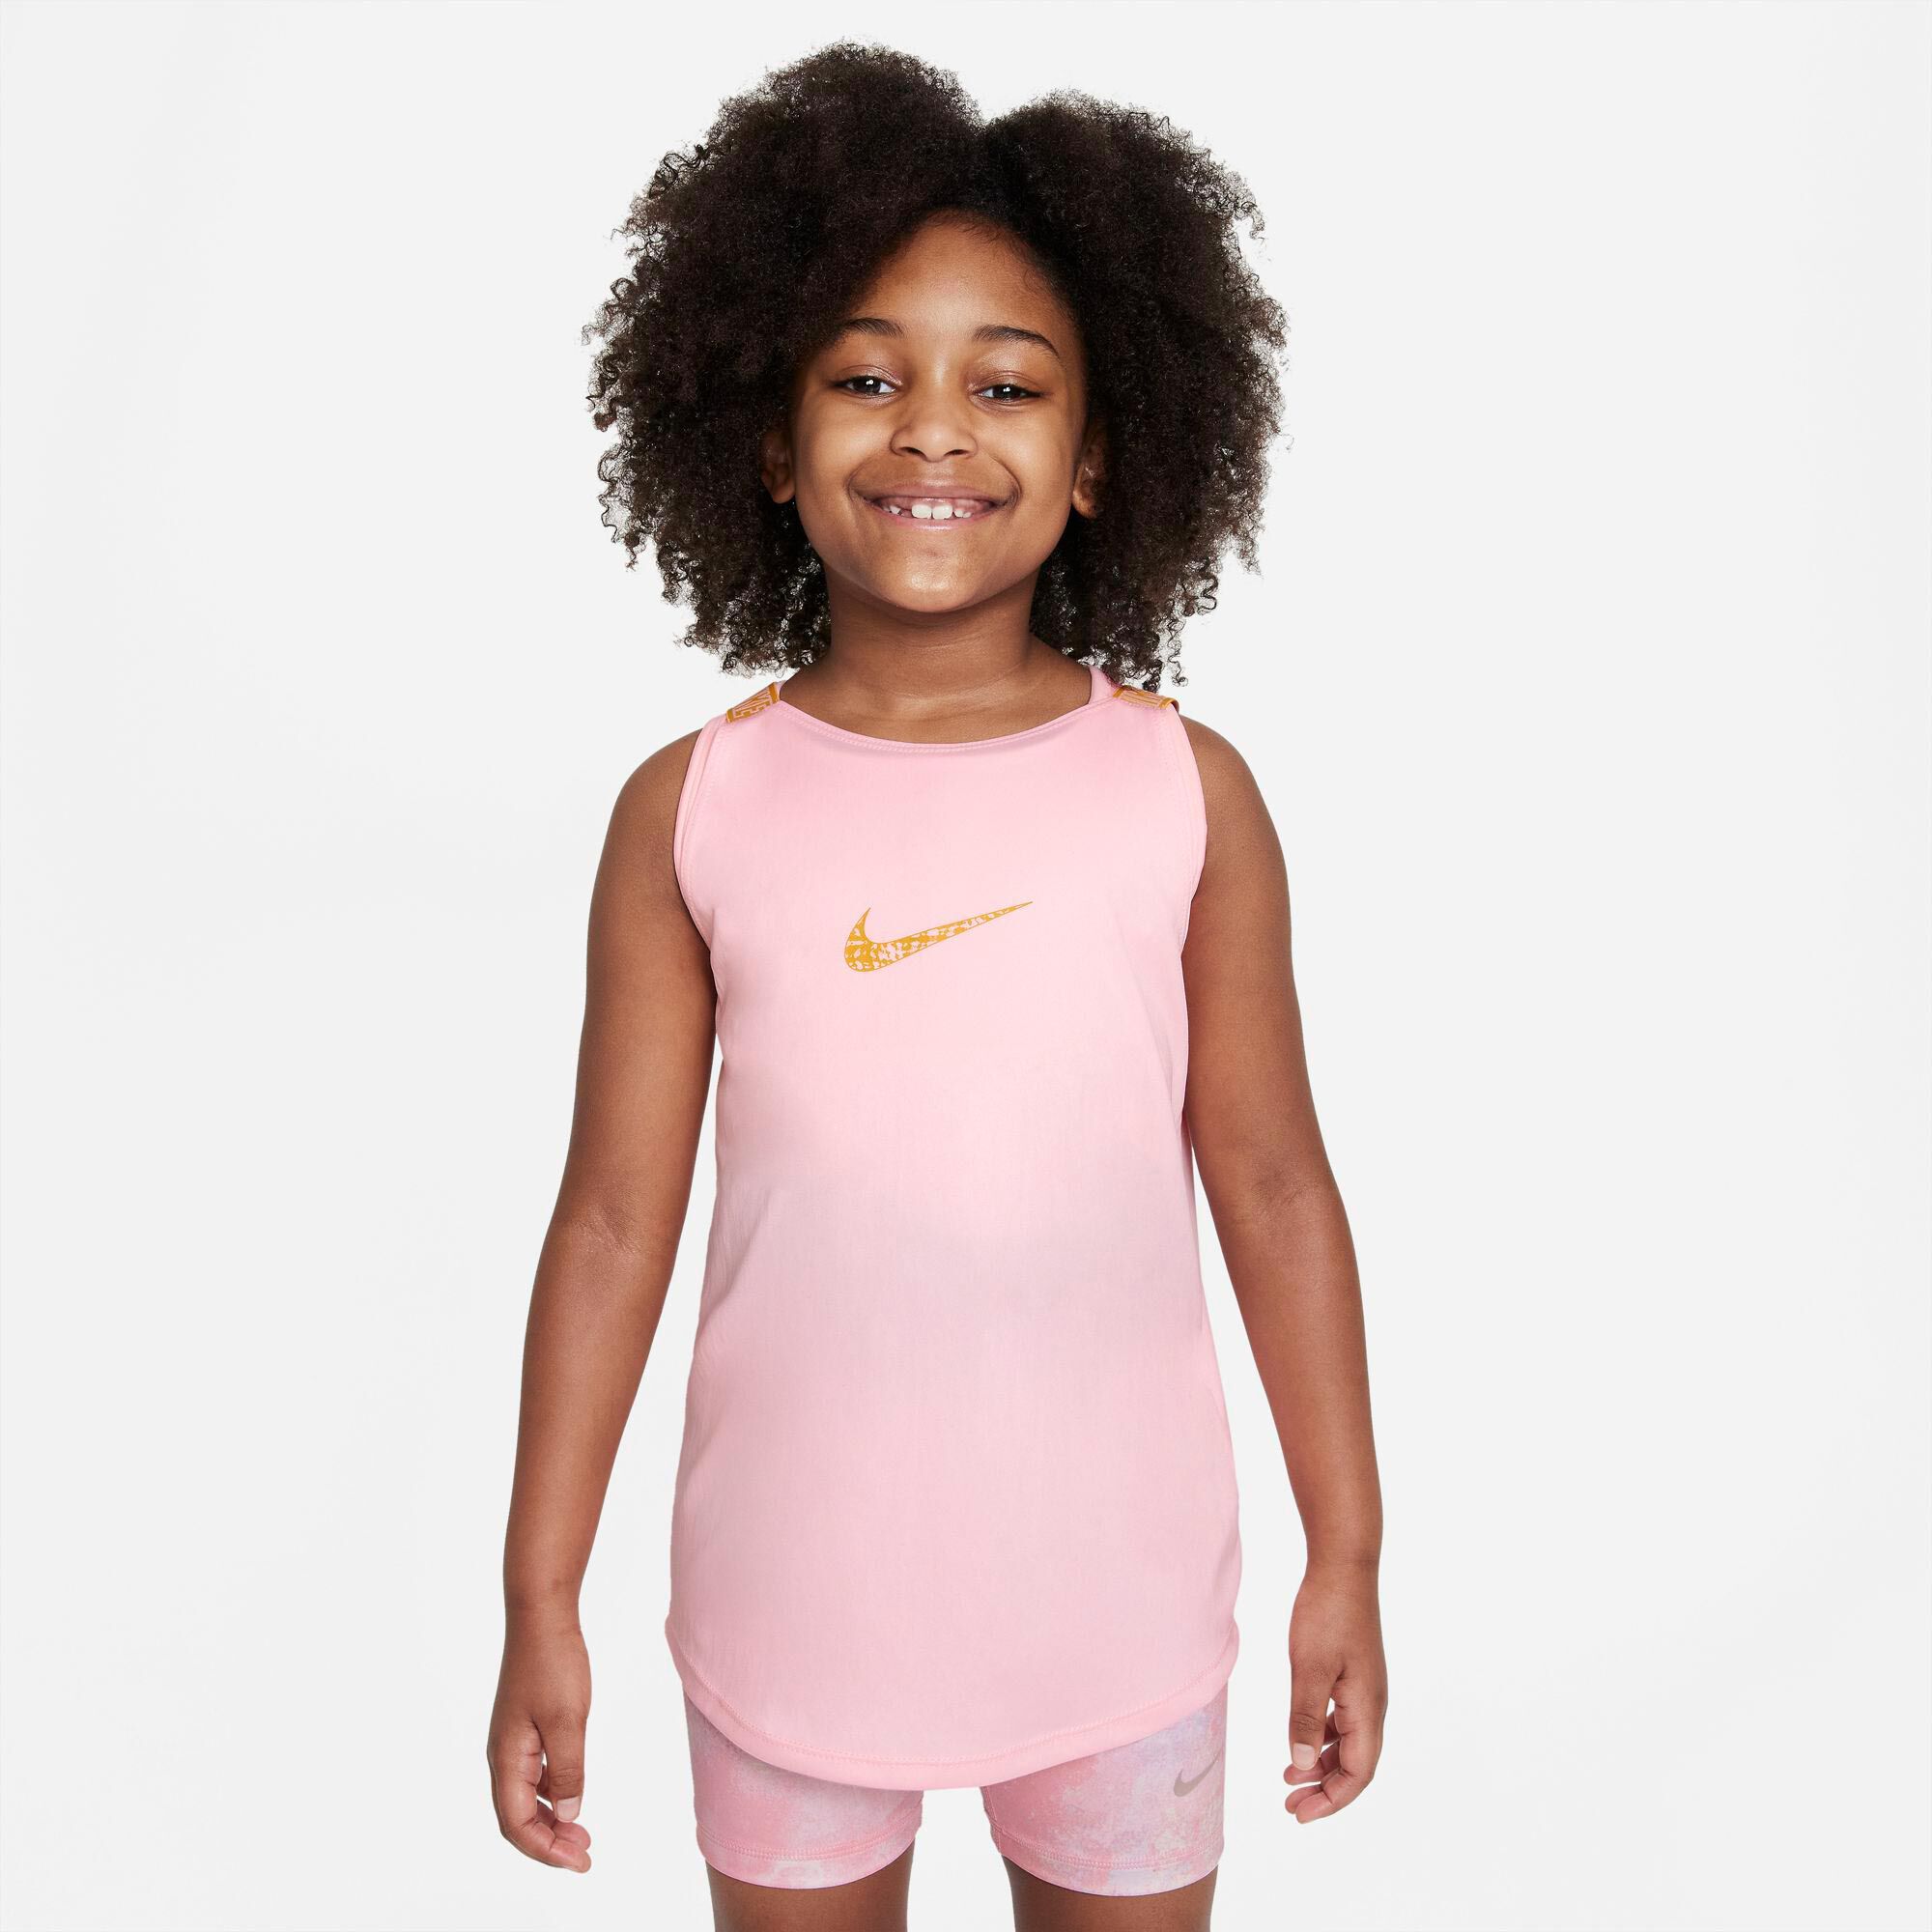 buy Nike Dri-Fit Elastika Tank Top Girls - Pink online | Tennis-Point